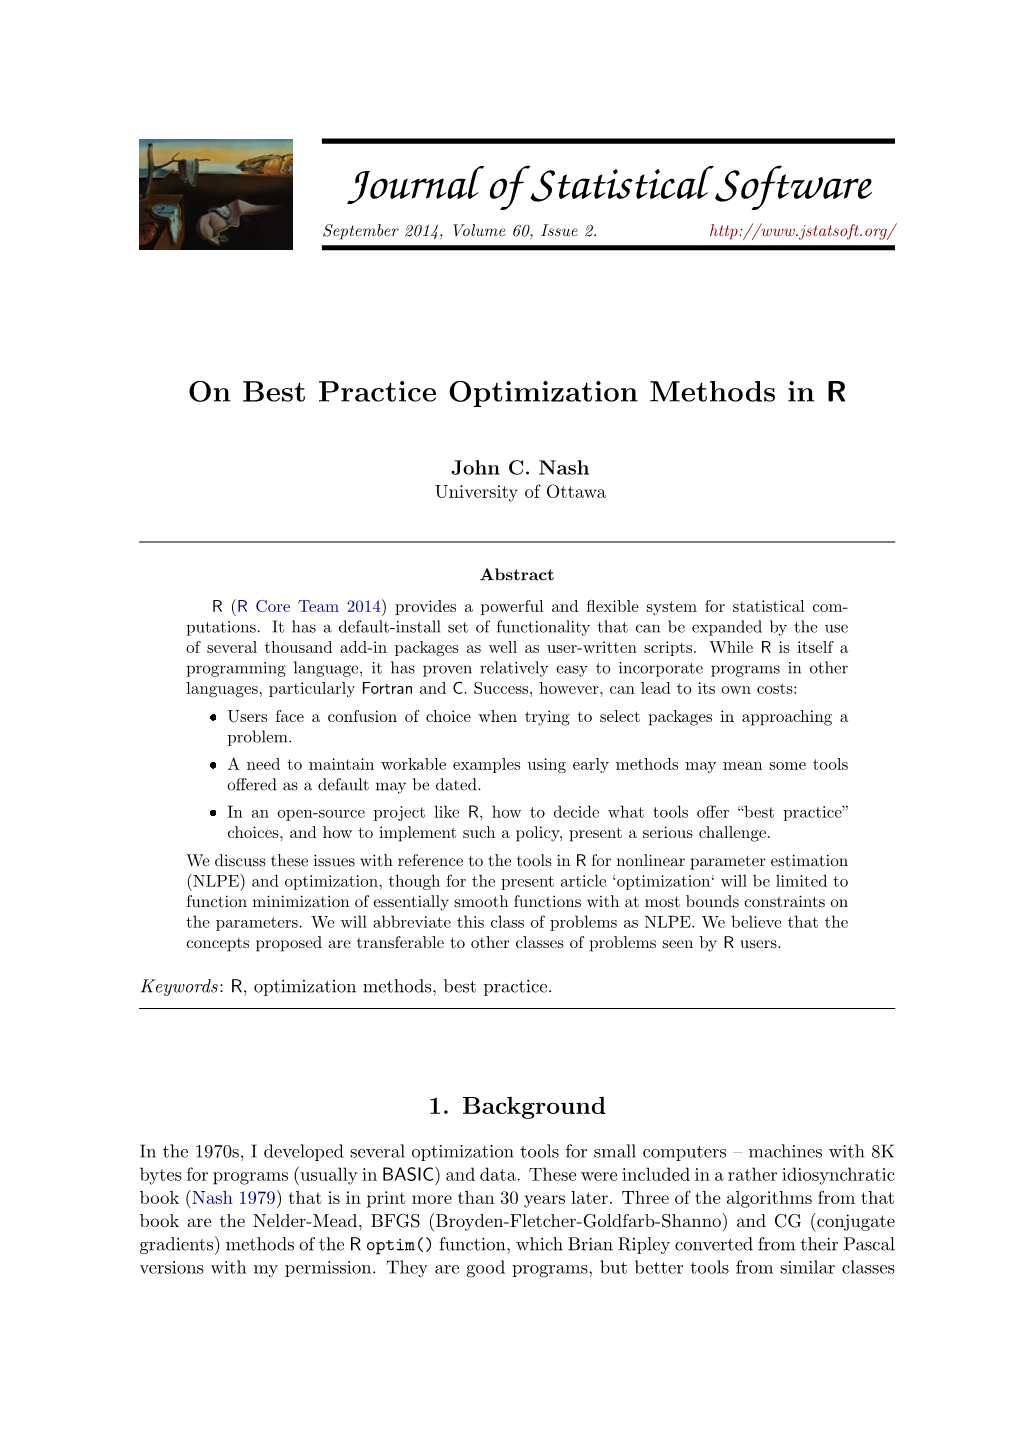 On Best Practice Optimization Methods in R